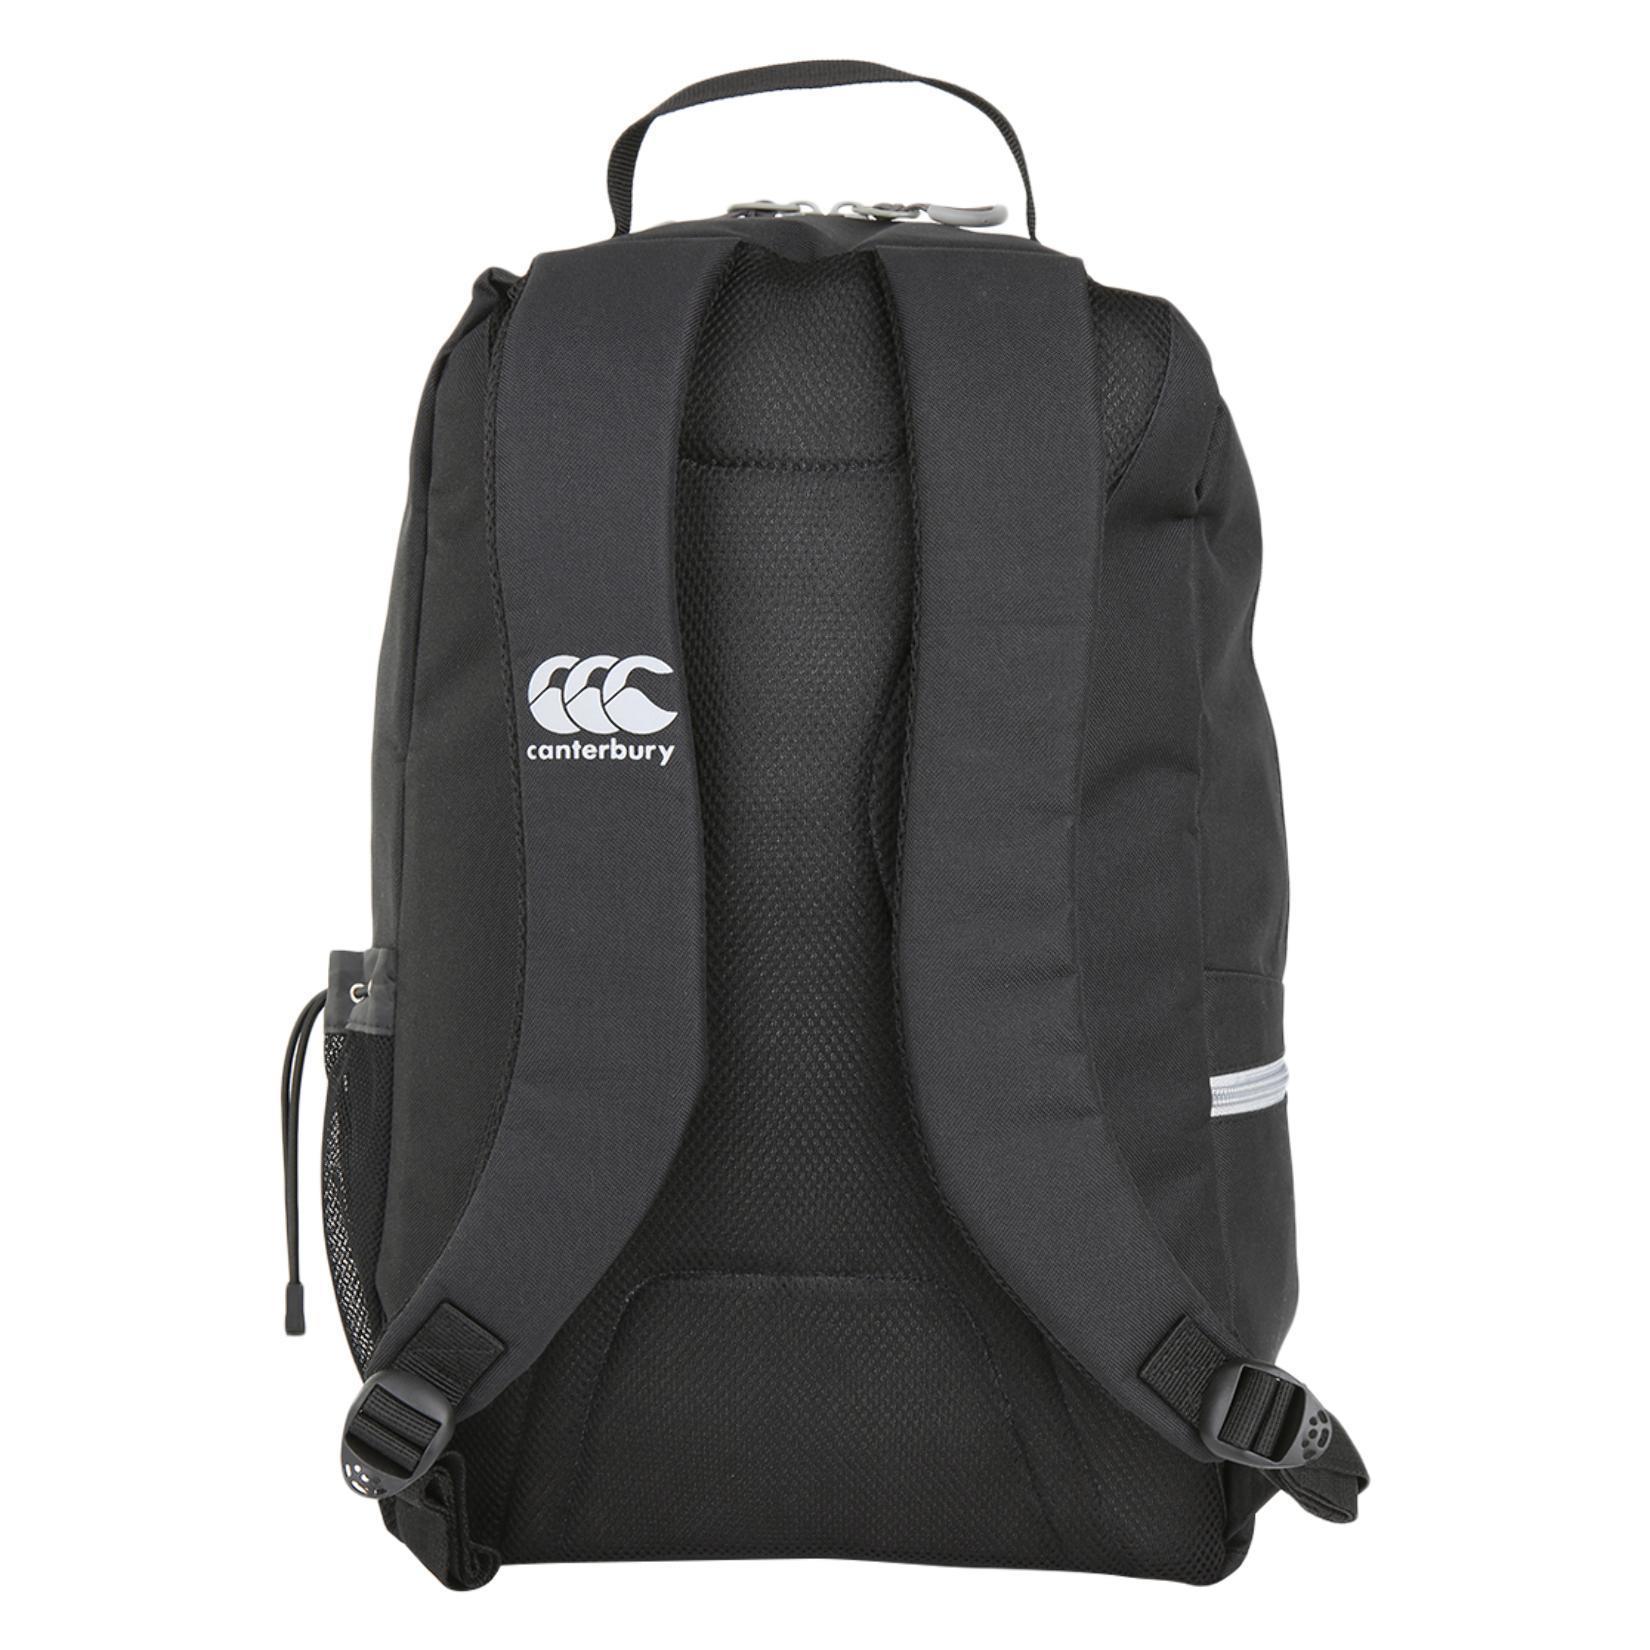 Canterbury Teamwear Backpack - Kitlocker.com